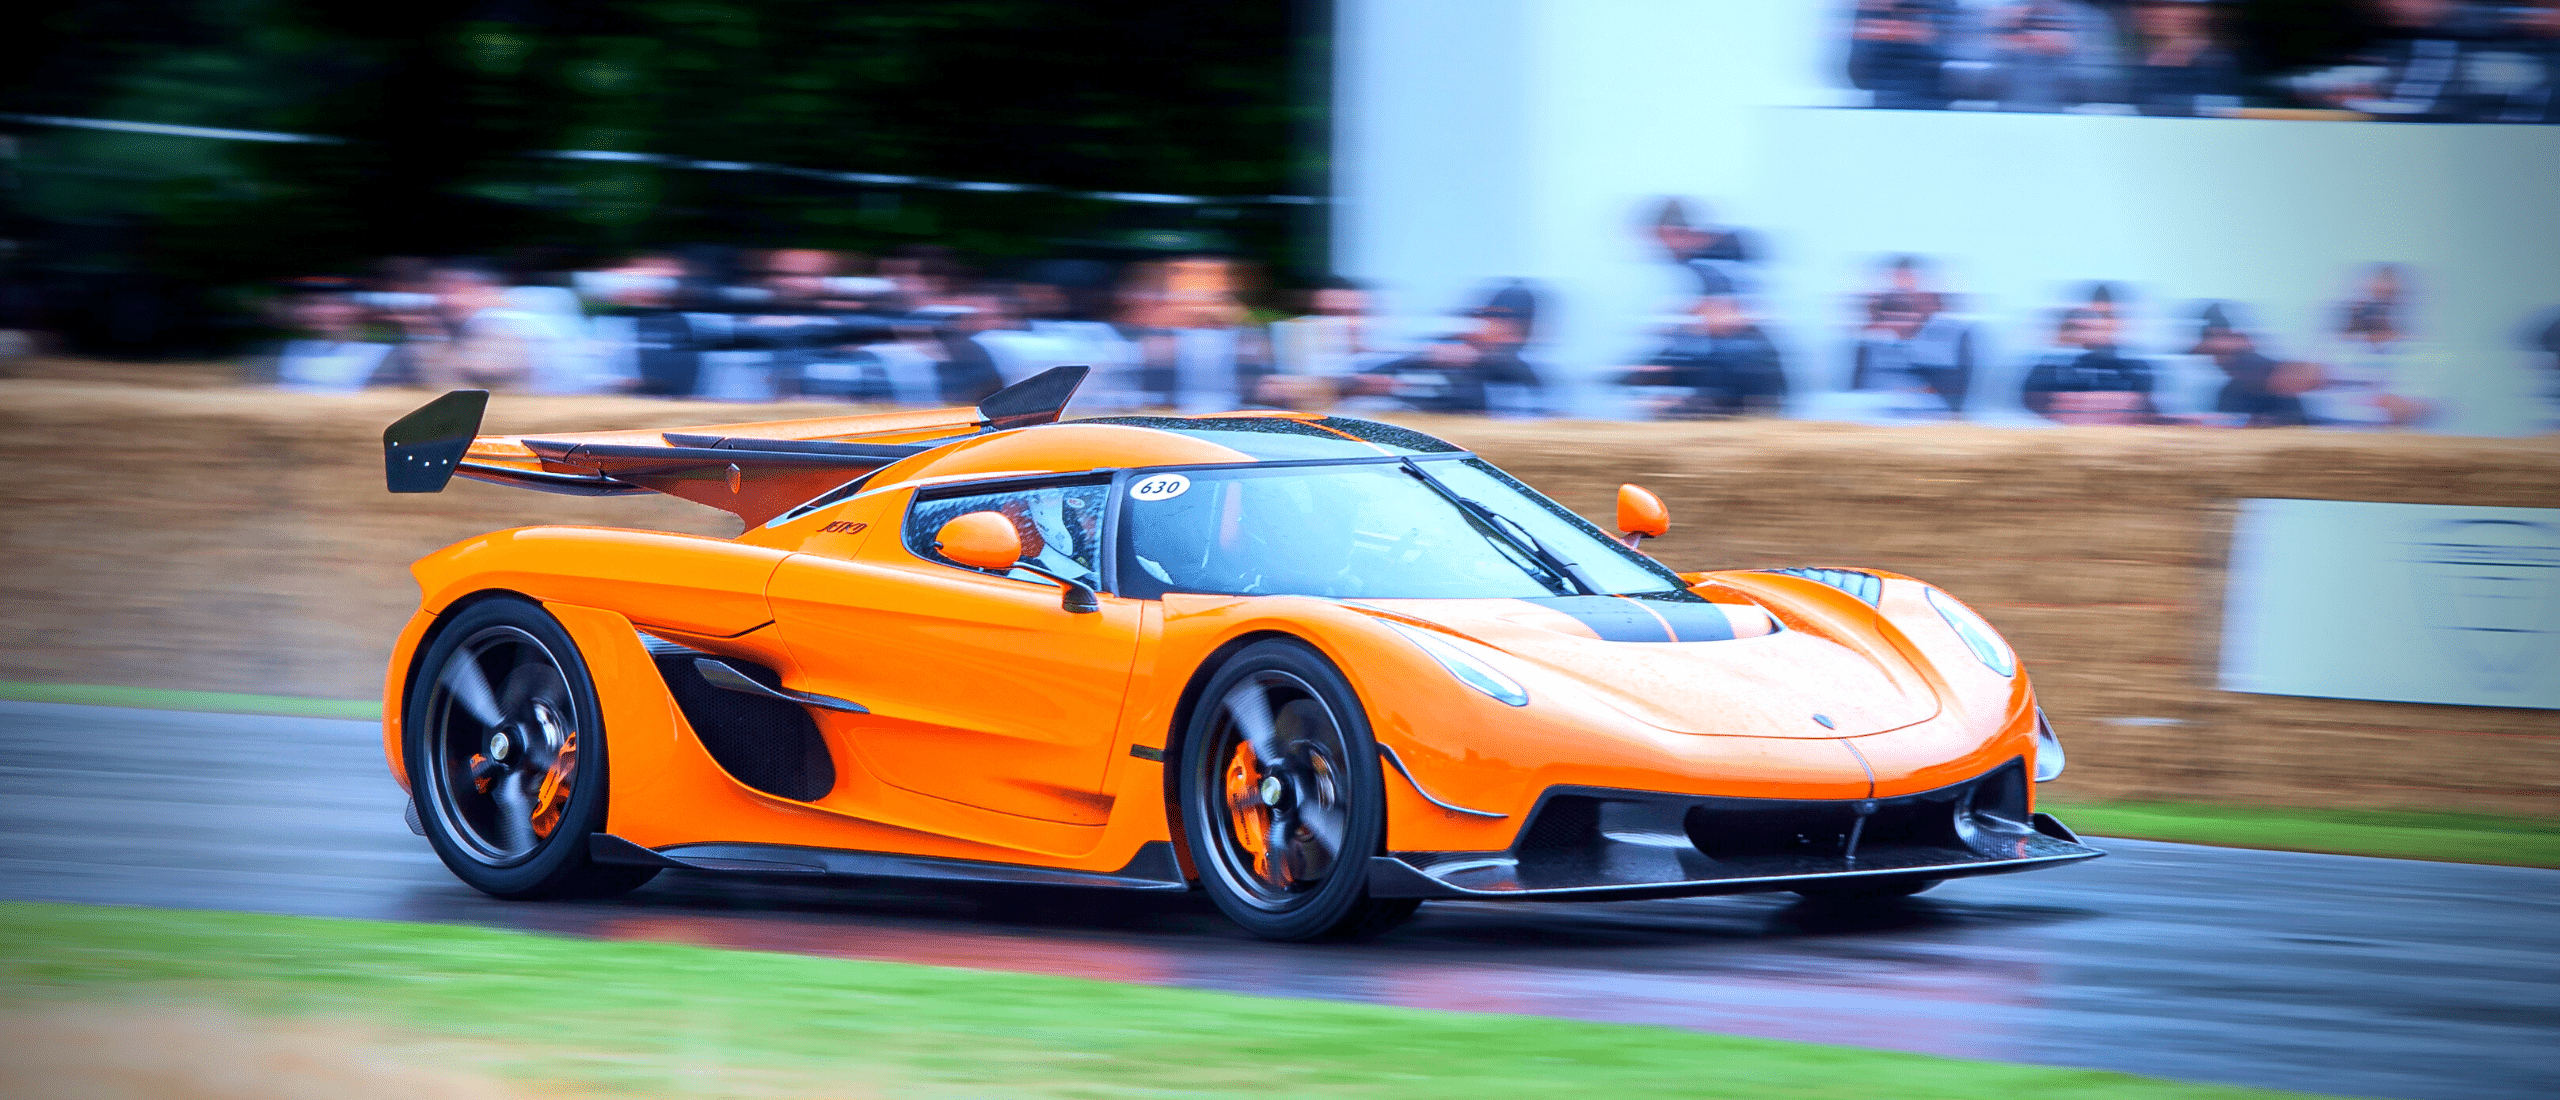 A bright orange sports car zooms around a track